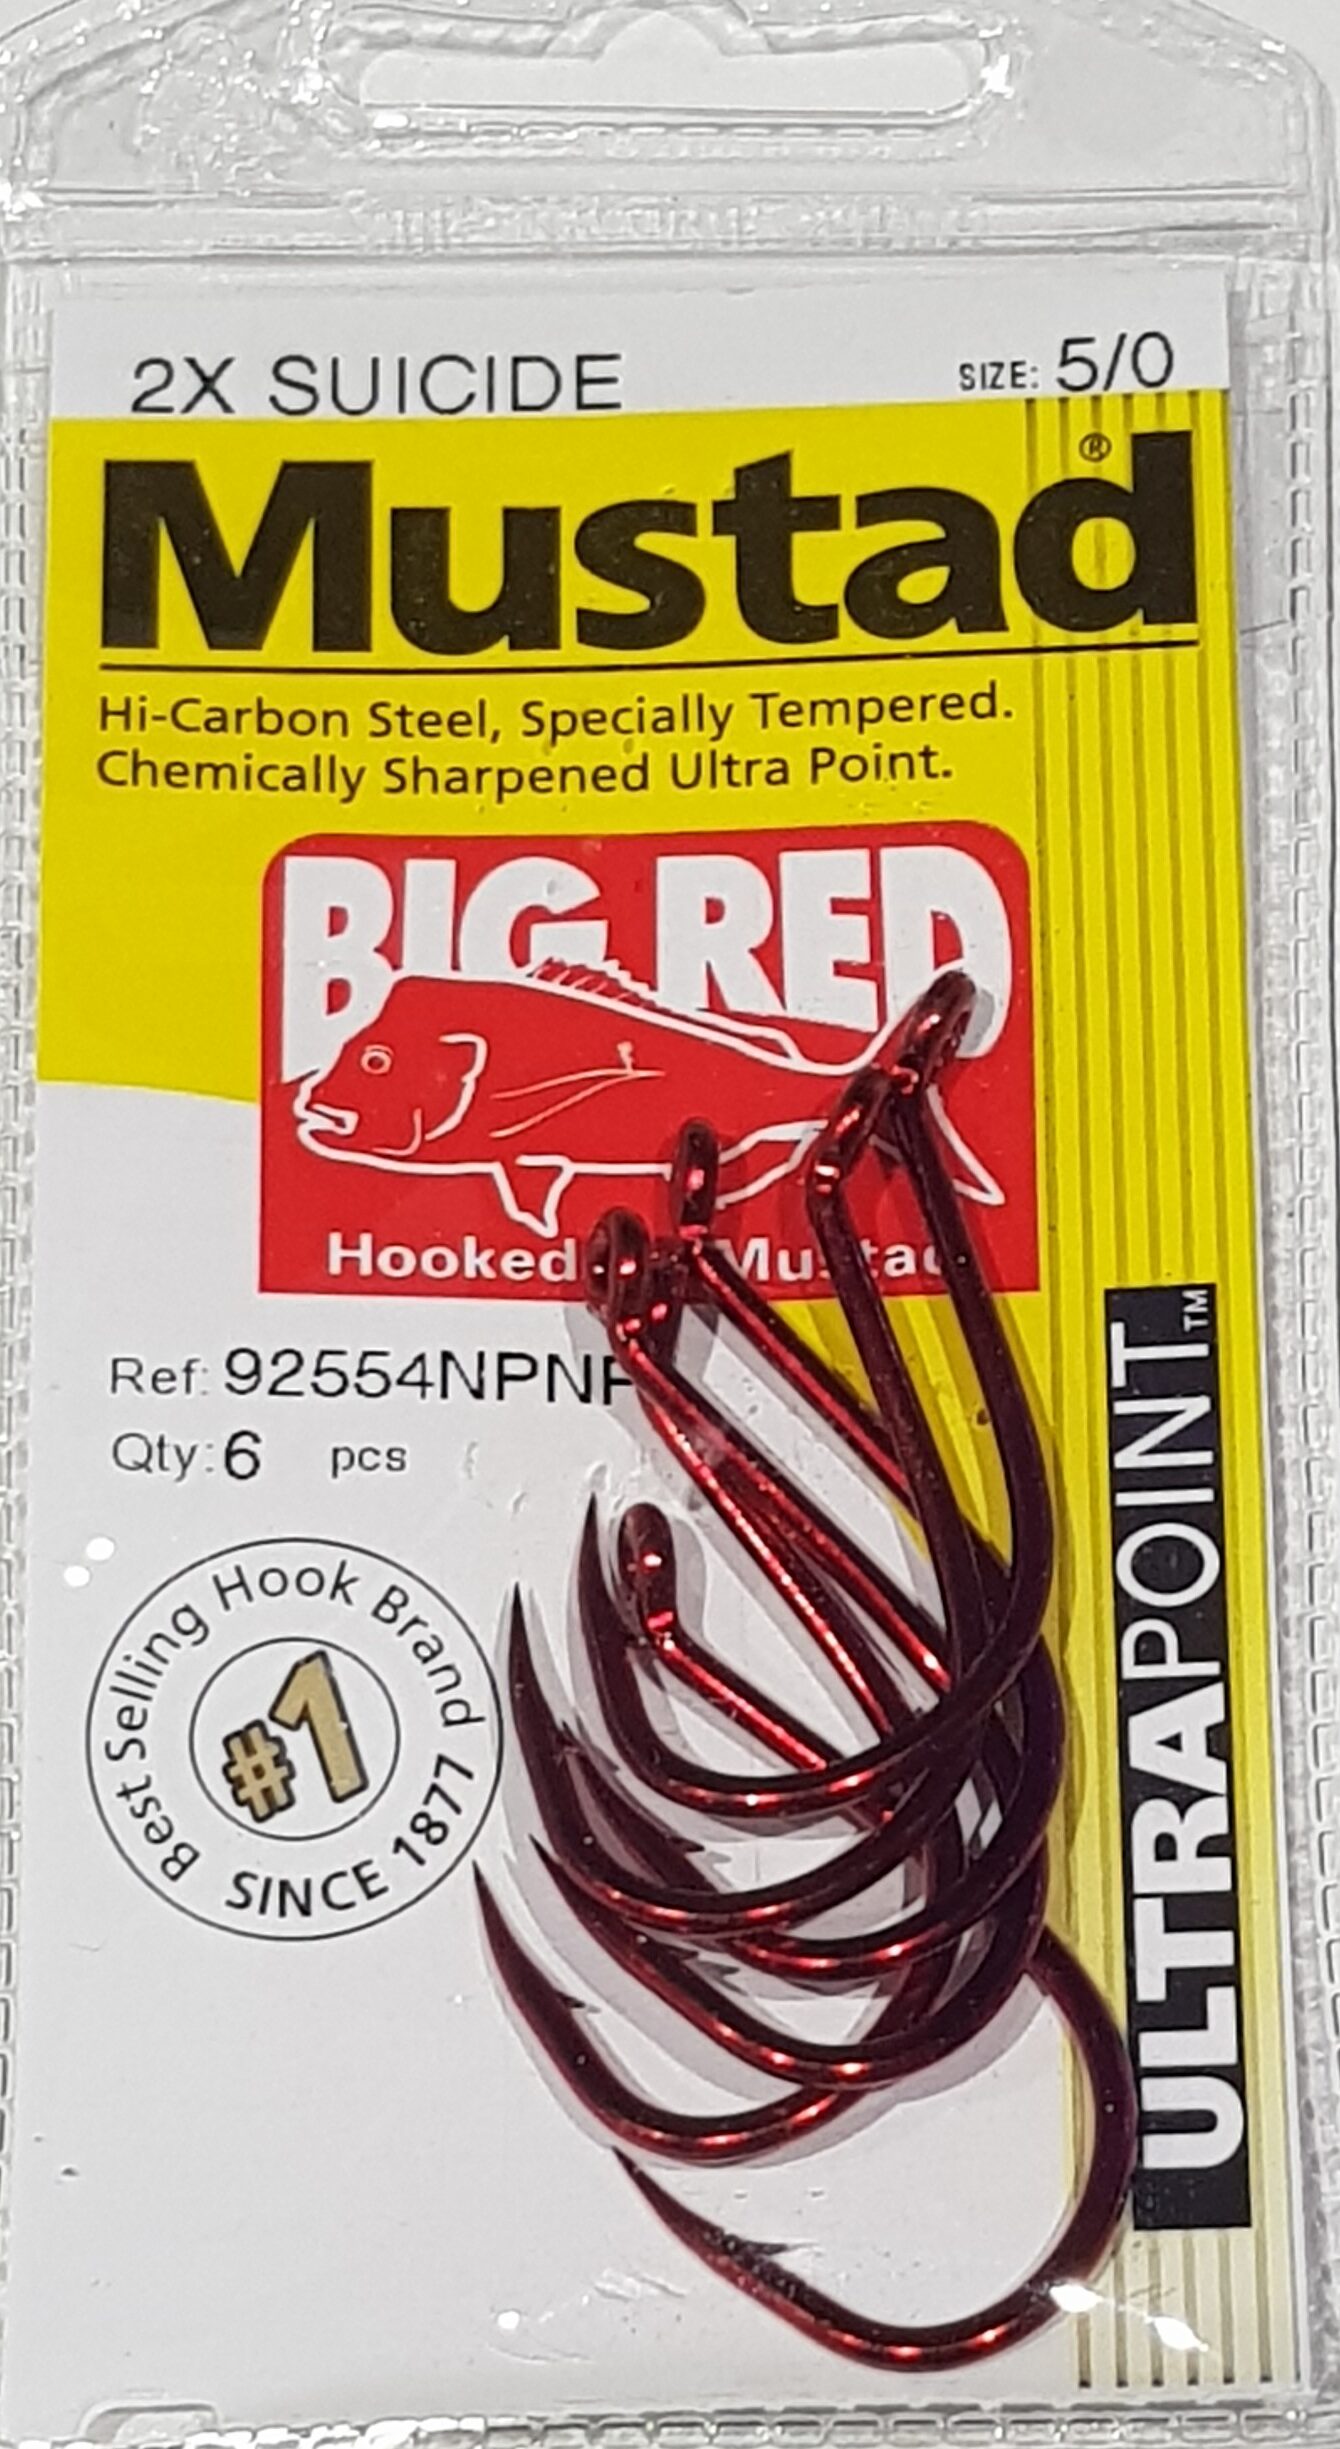 Mustad Big Red Suicide Fishing Hooks 5/0